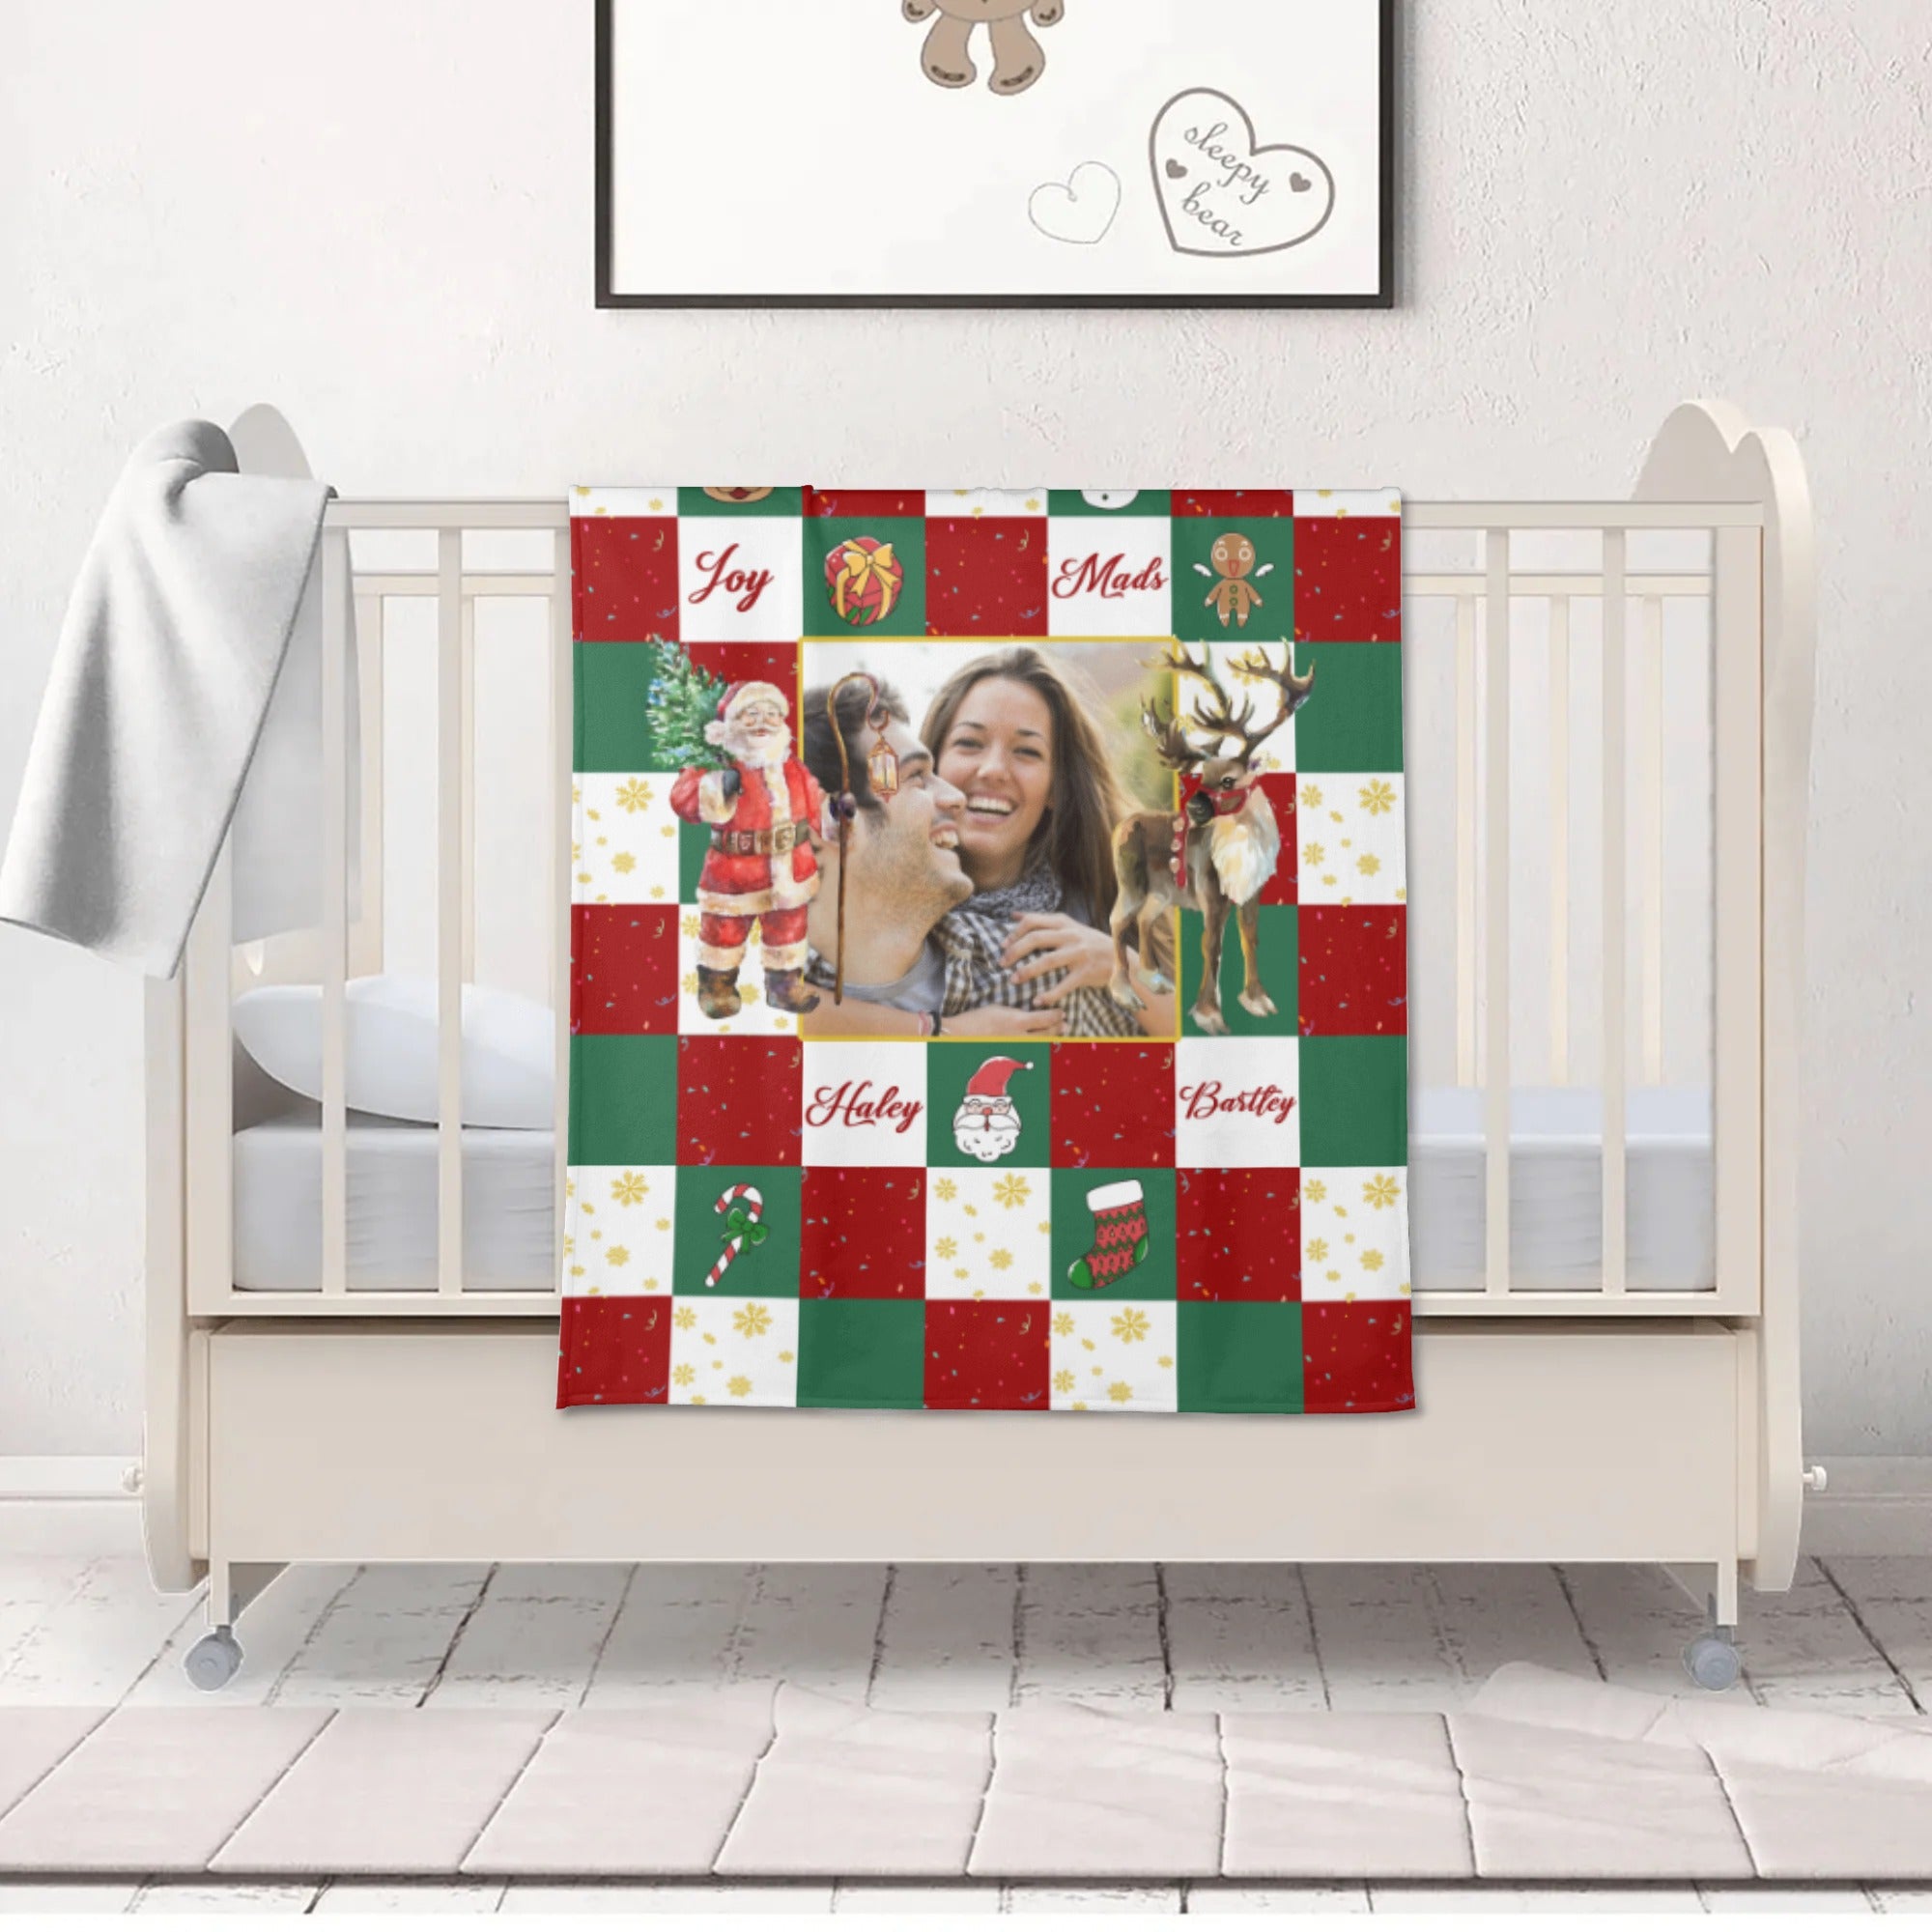 Customizable Photo Blanket, Christmas blanket, Photo blanket gift for him or her, Family & Friends Custom Gifts, Special Memory Keepsake